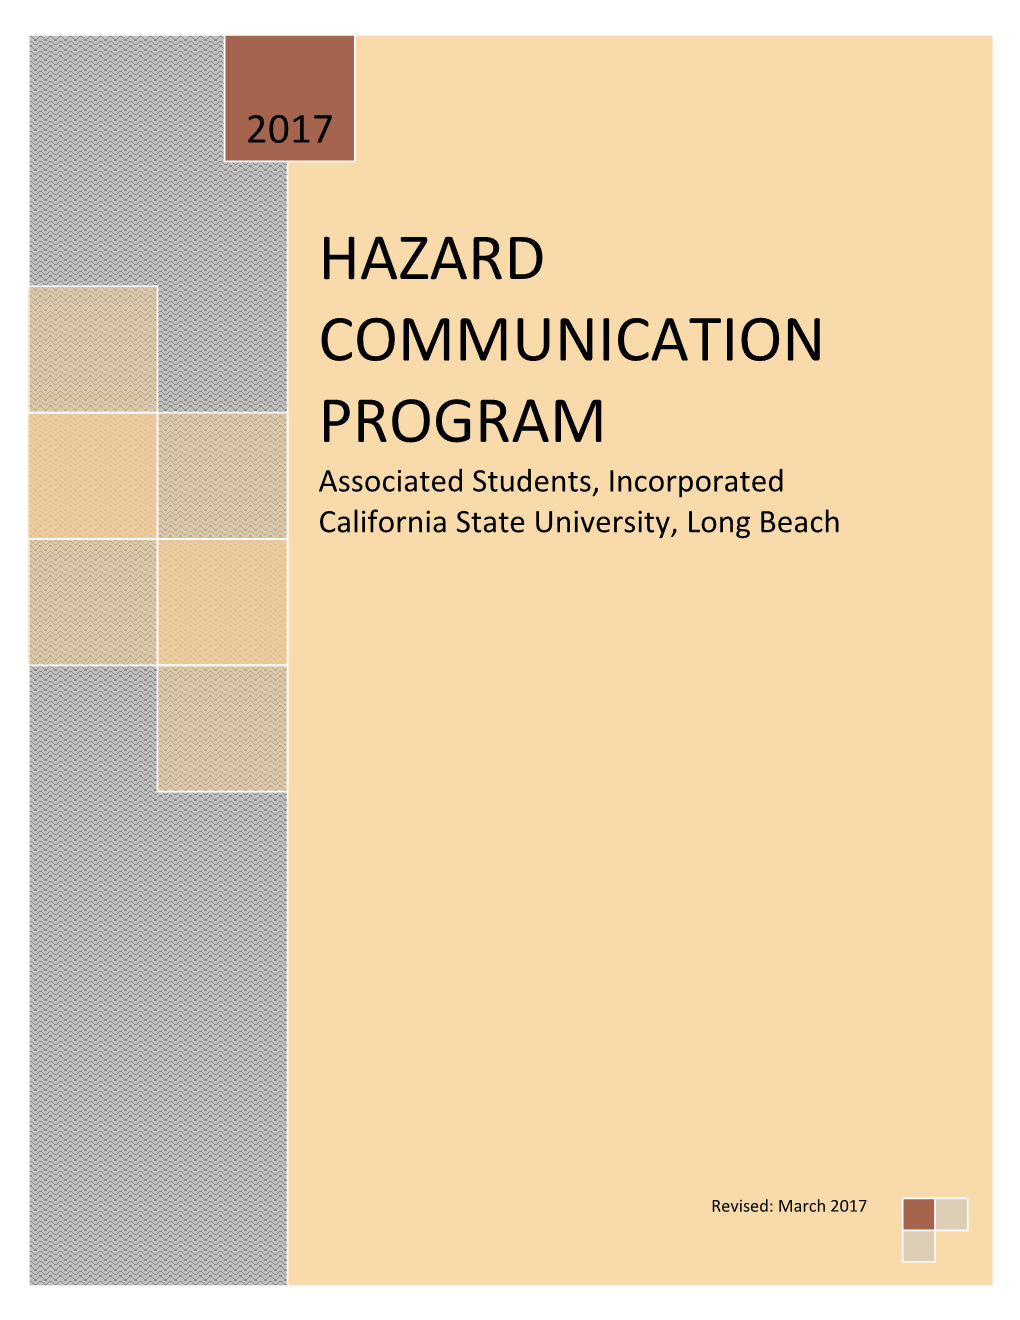 Policy on Hazard Communication Program